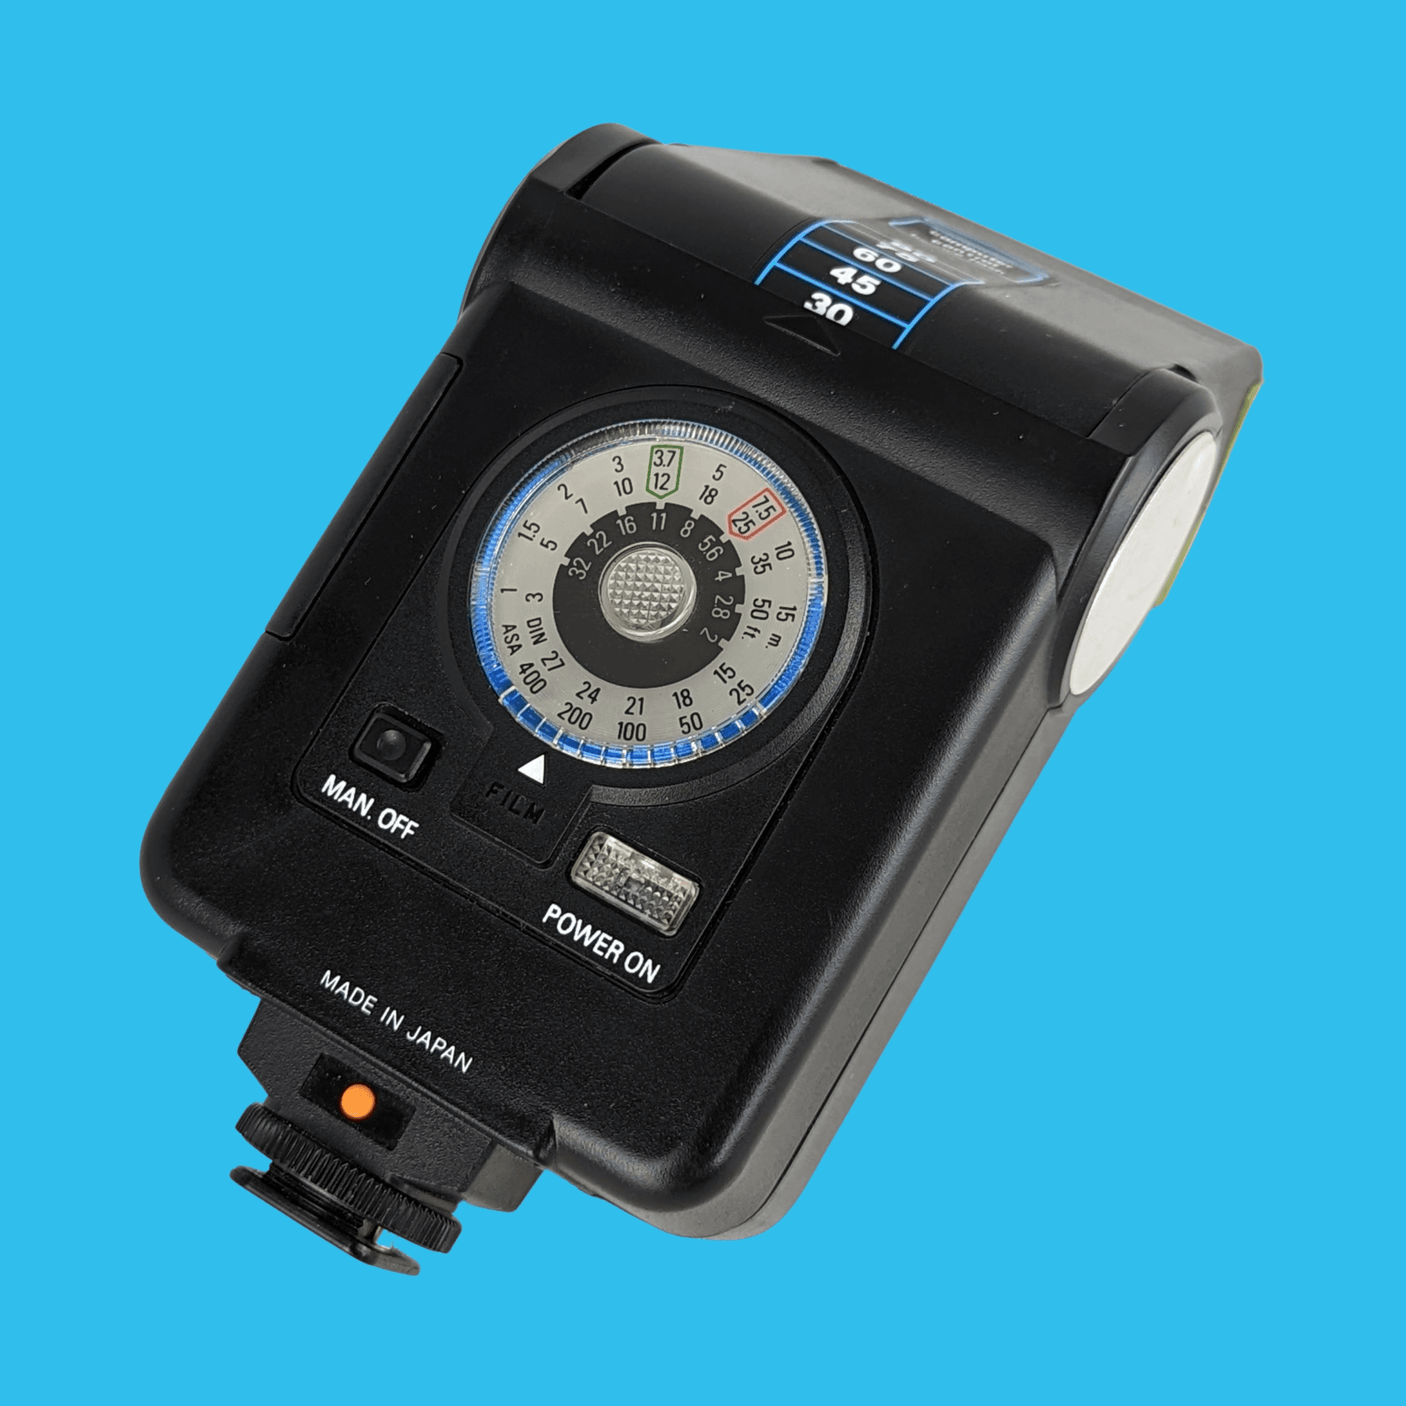 Chinon 900 C External Flash Unit for 35mm Film Camera